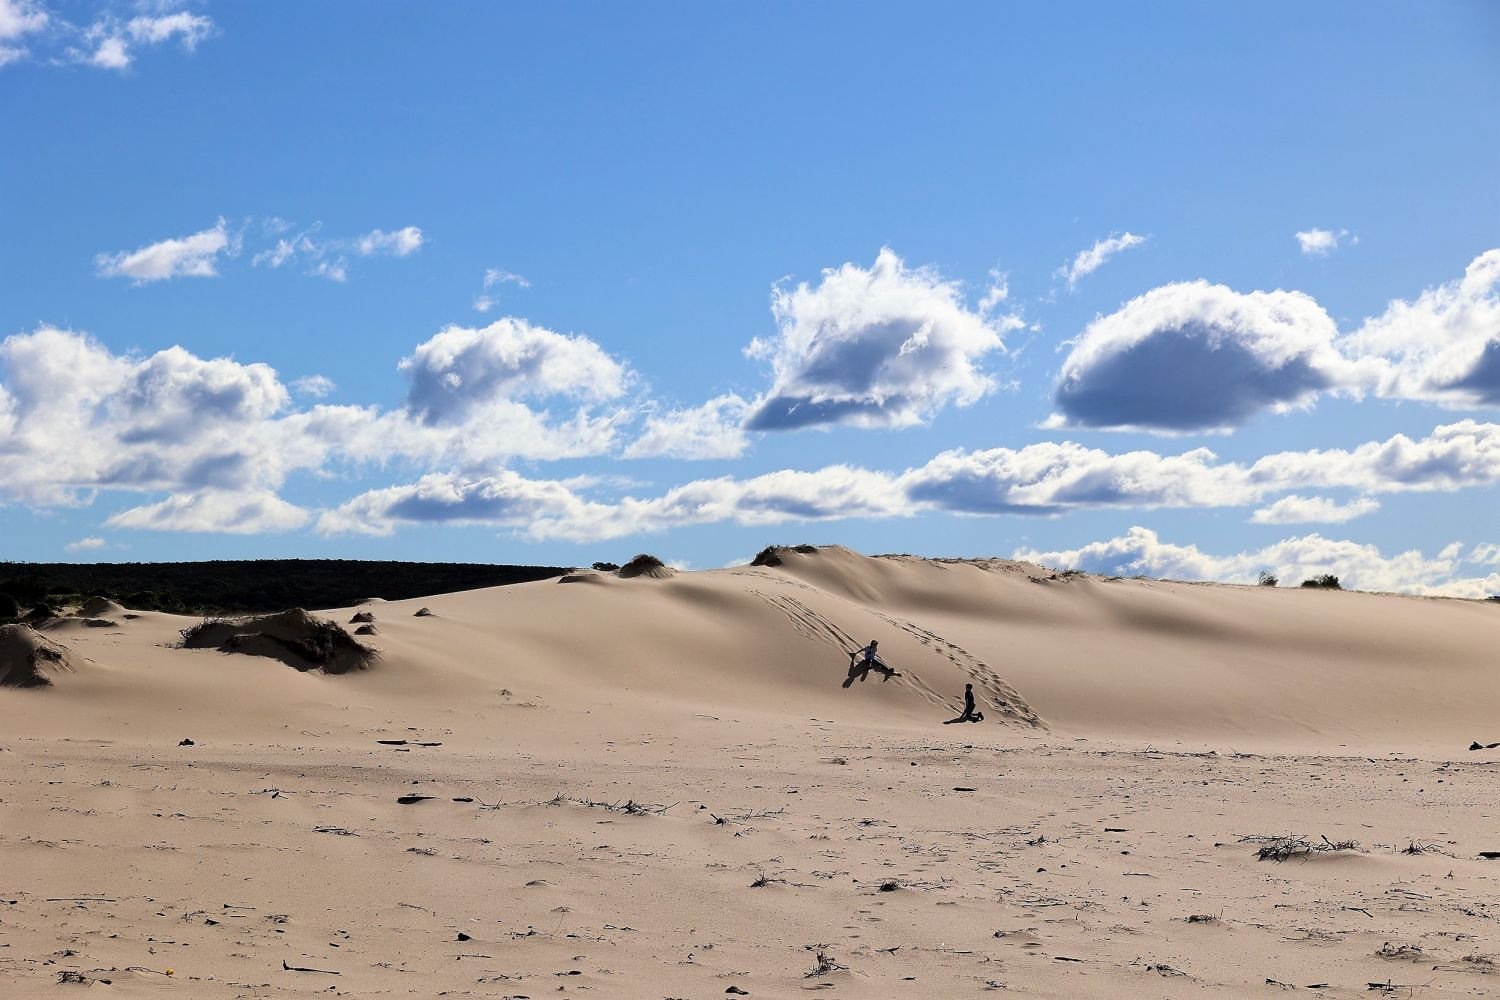 Marley beach sand dunes